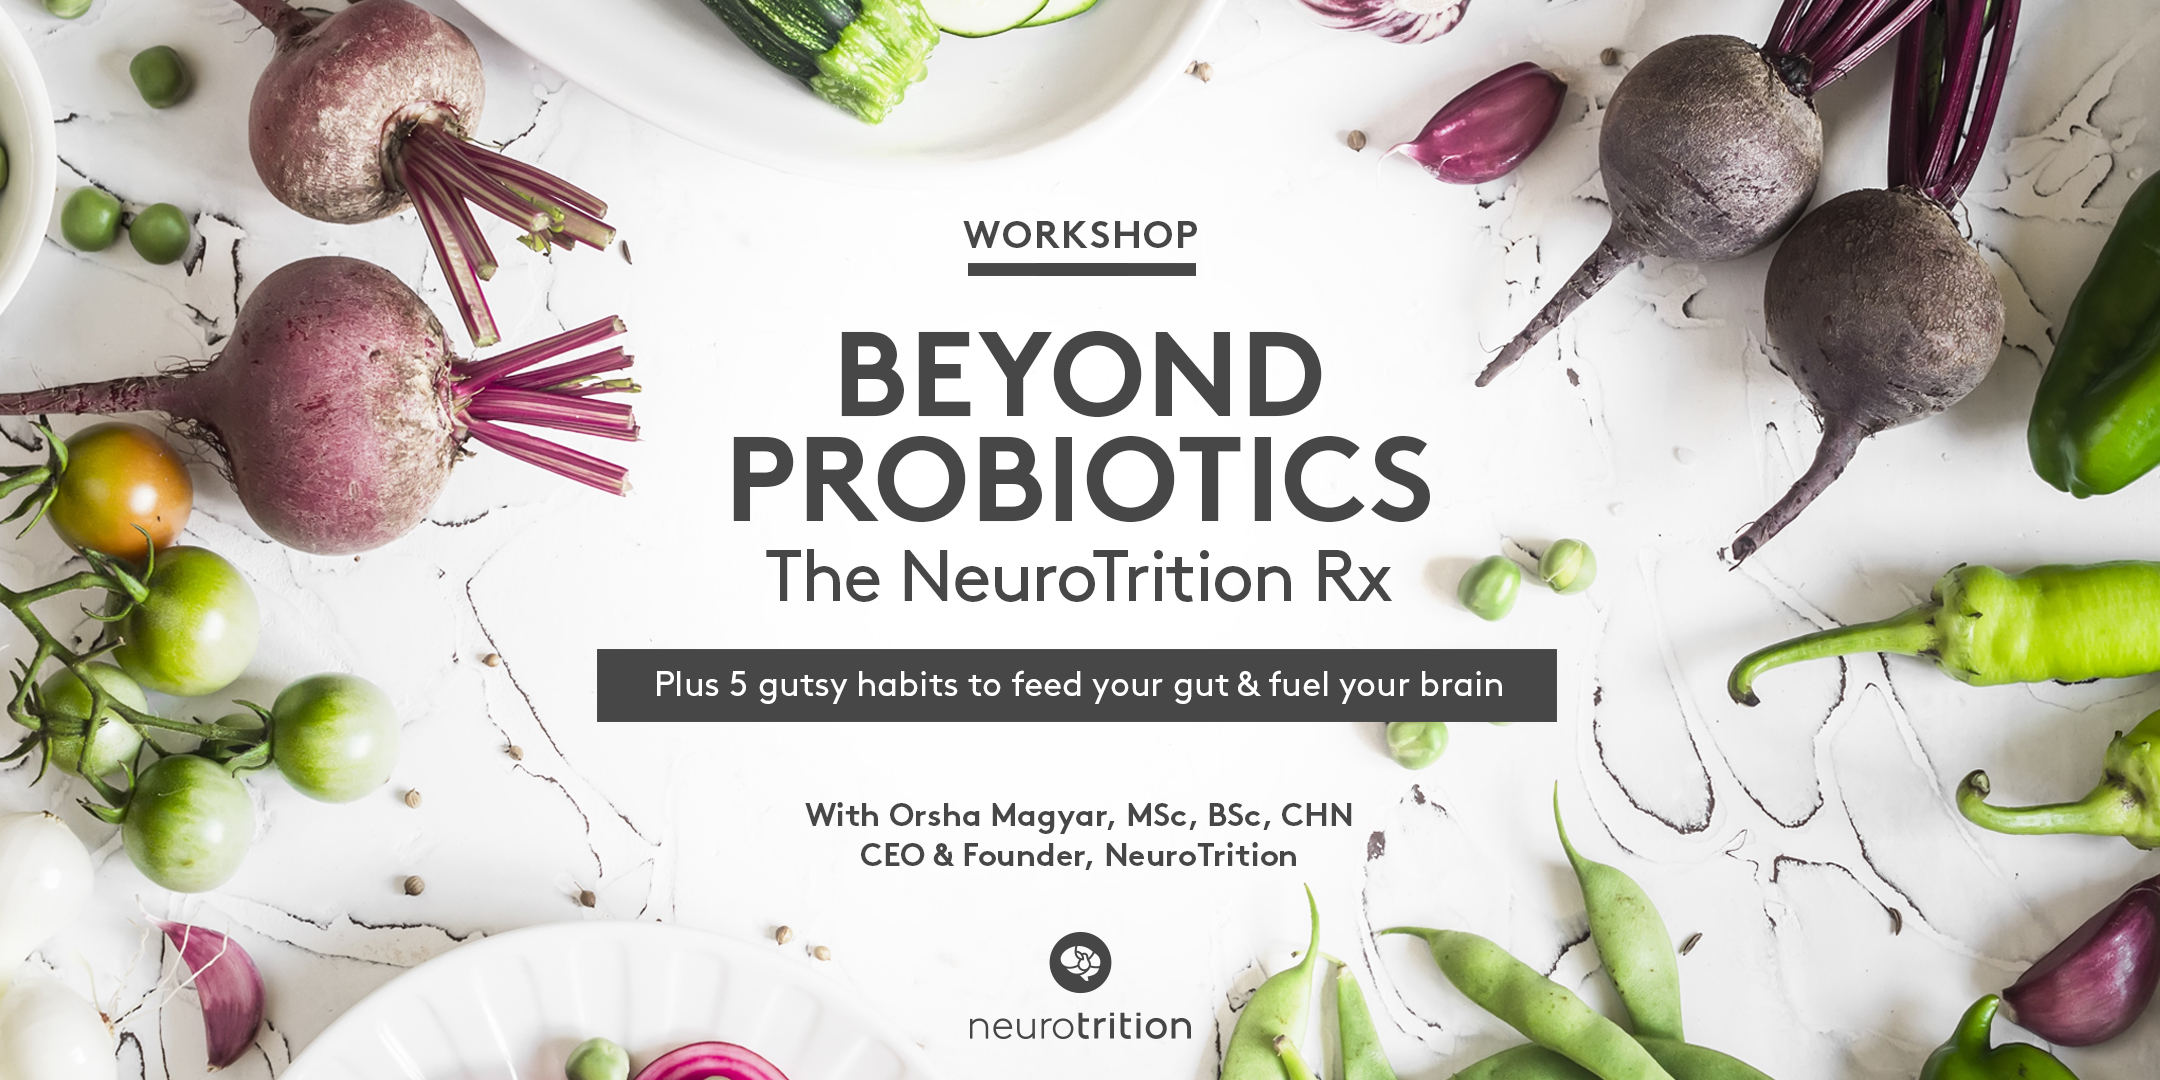 Beyond Probiotics Workshop Title Surrounded By Vegetables